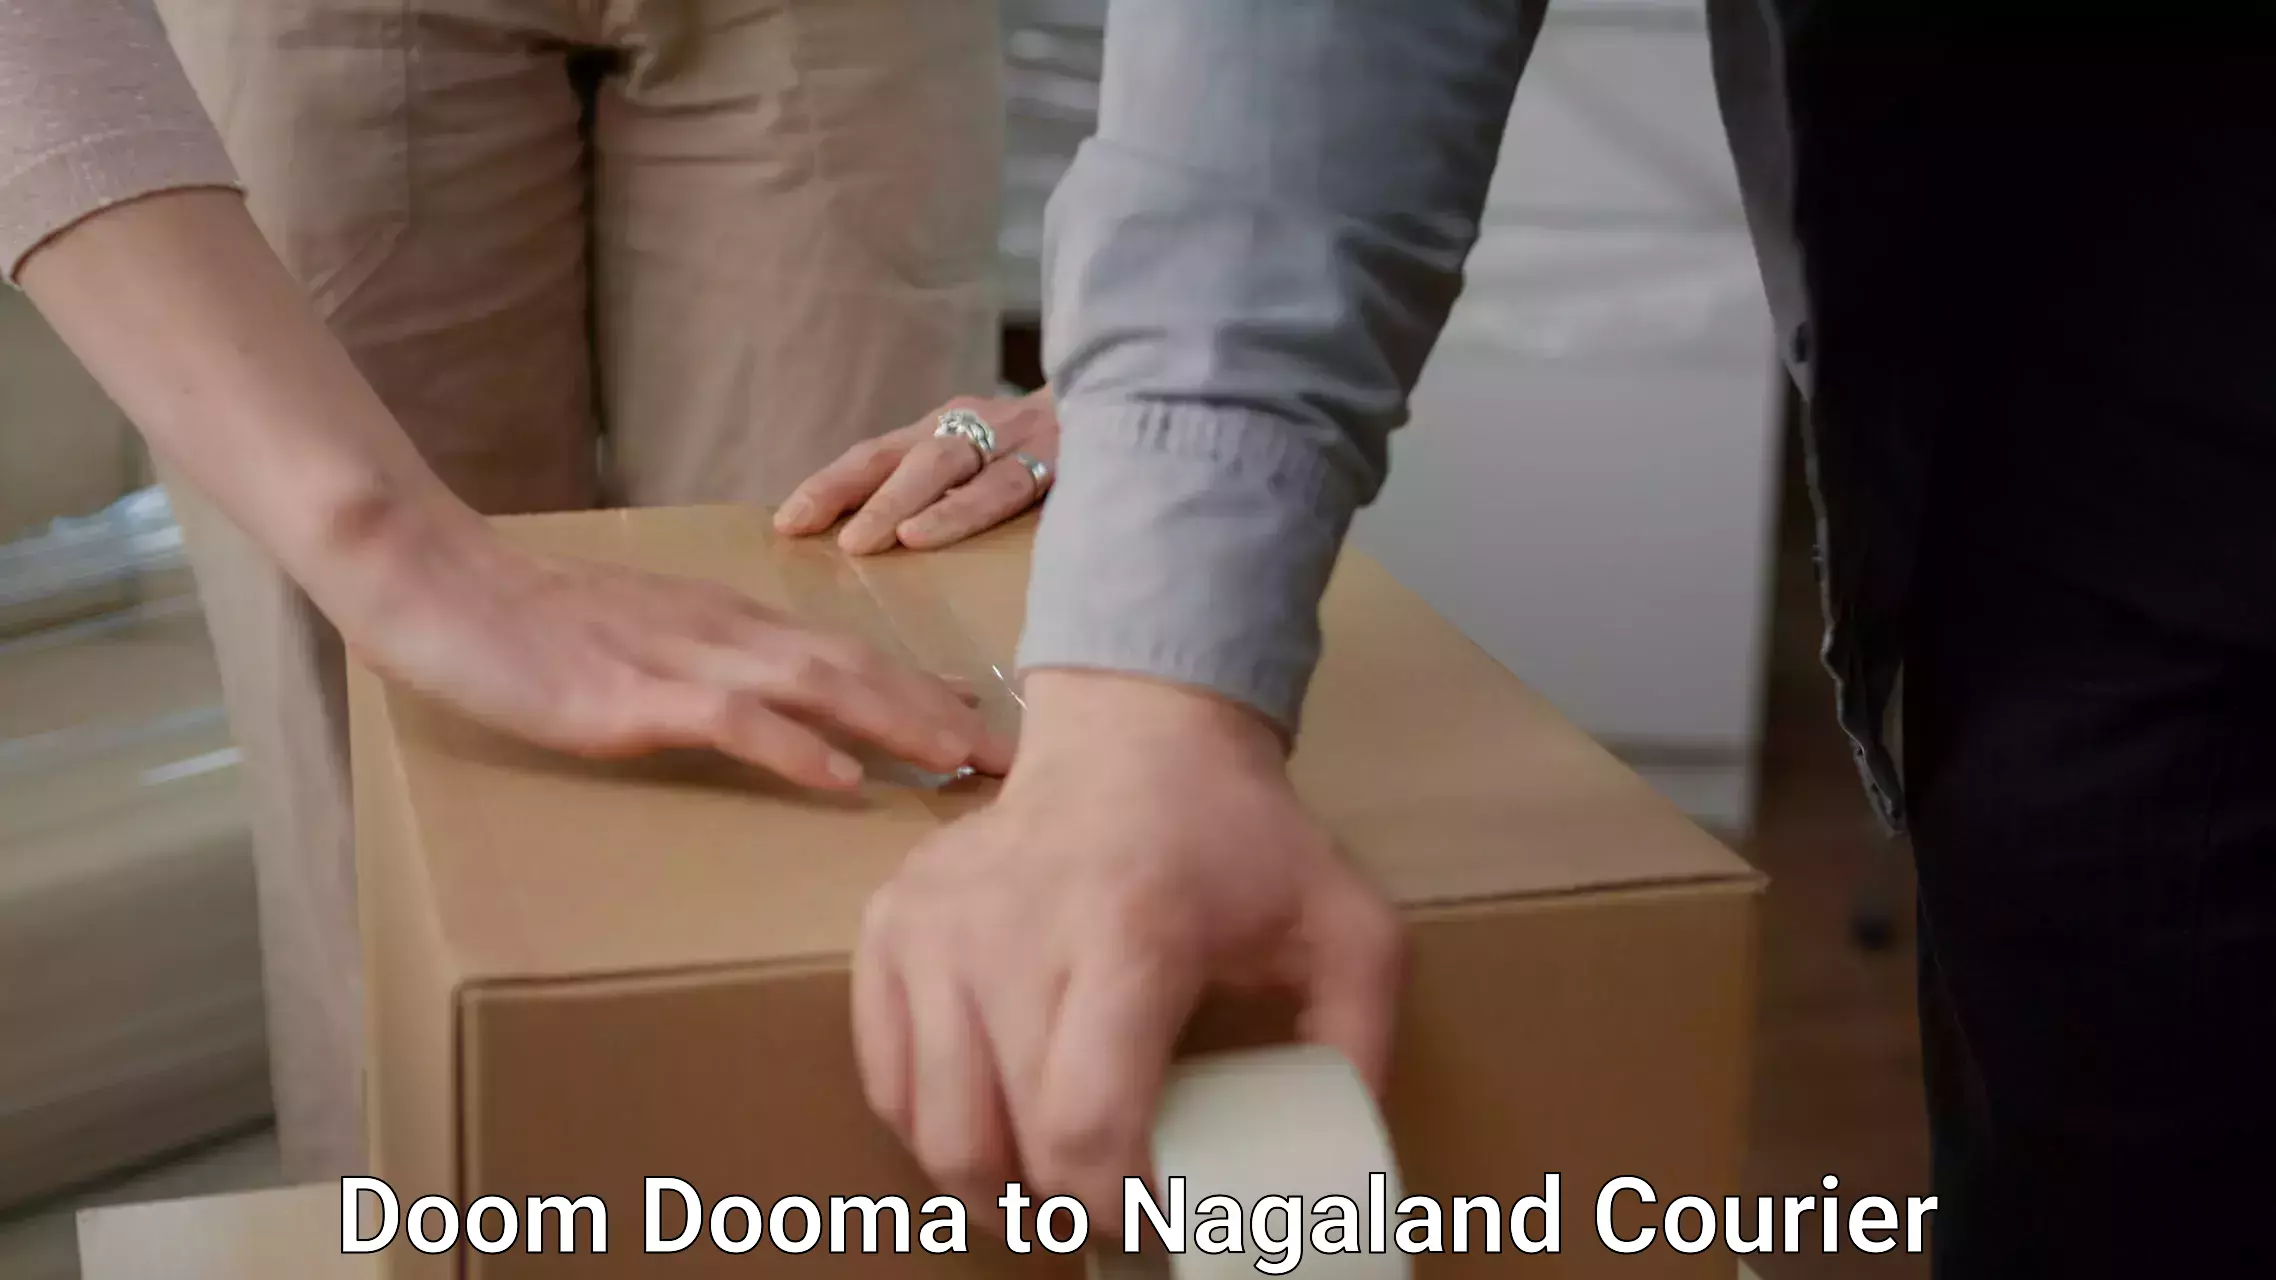 Professional moving company Doom Dooma to Mon